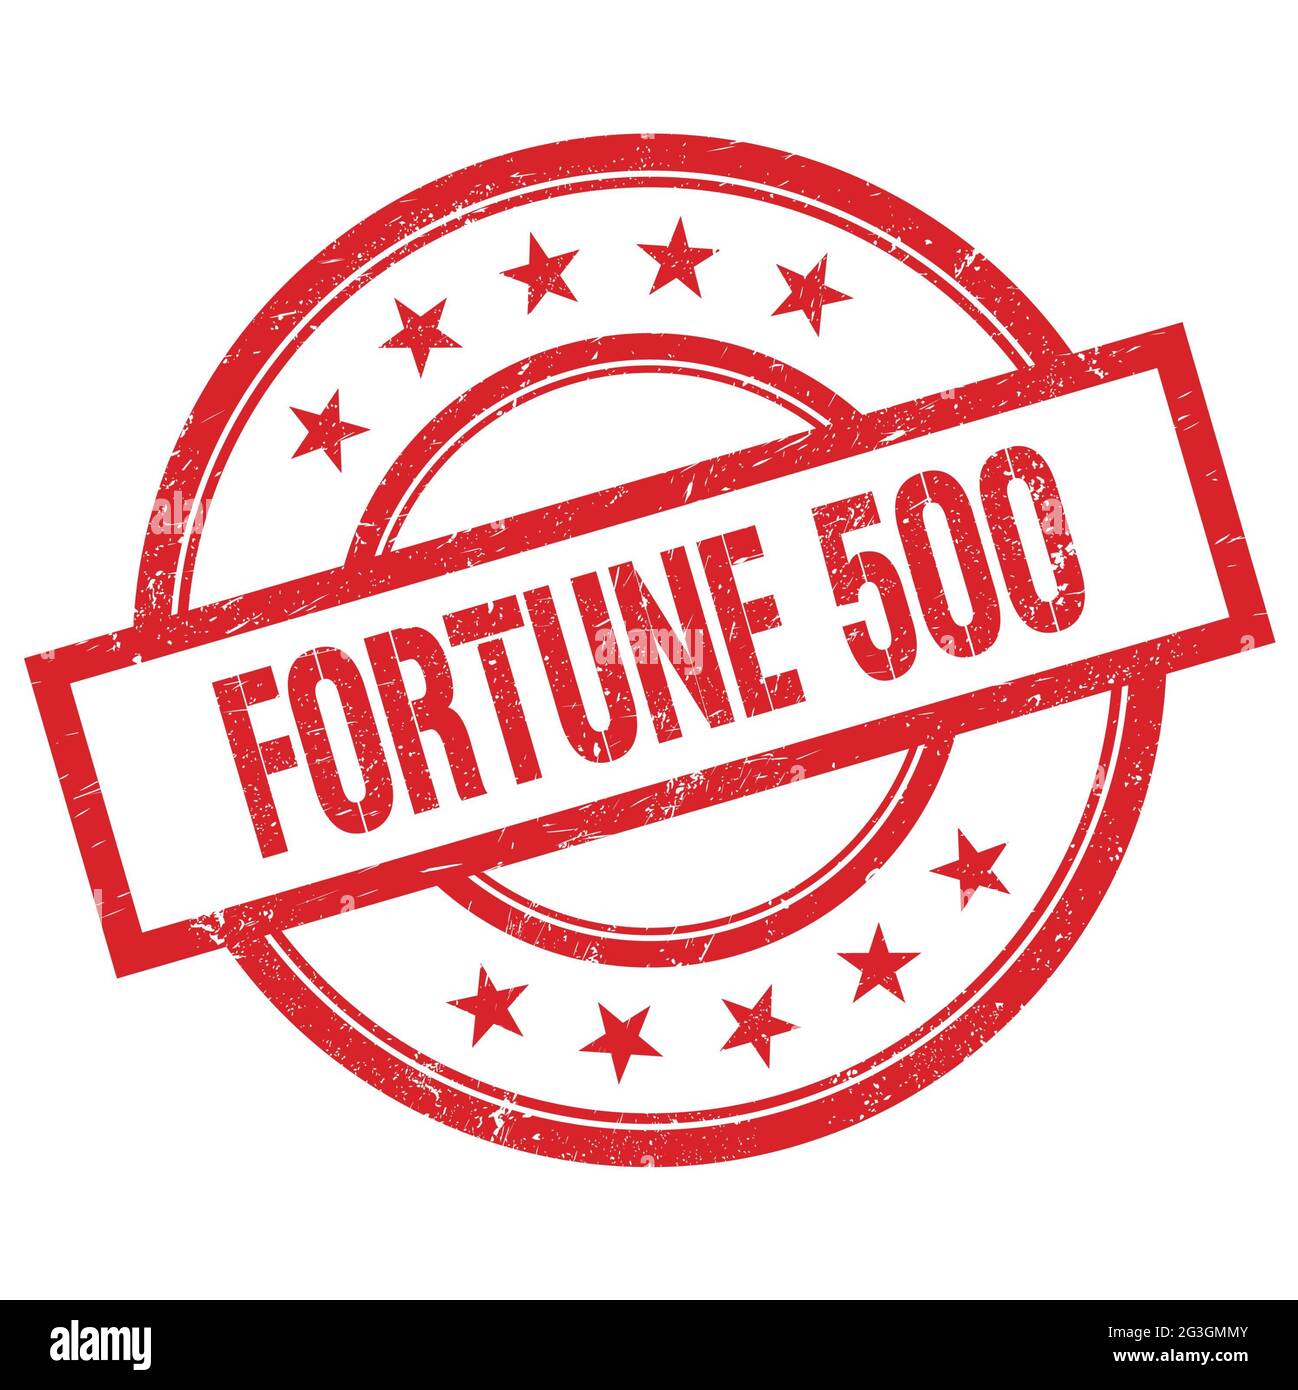 fortune 500 logo vector